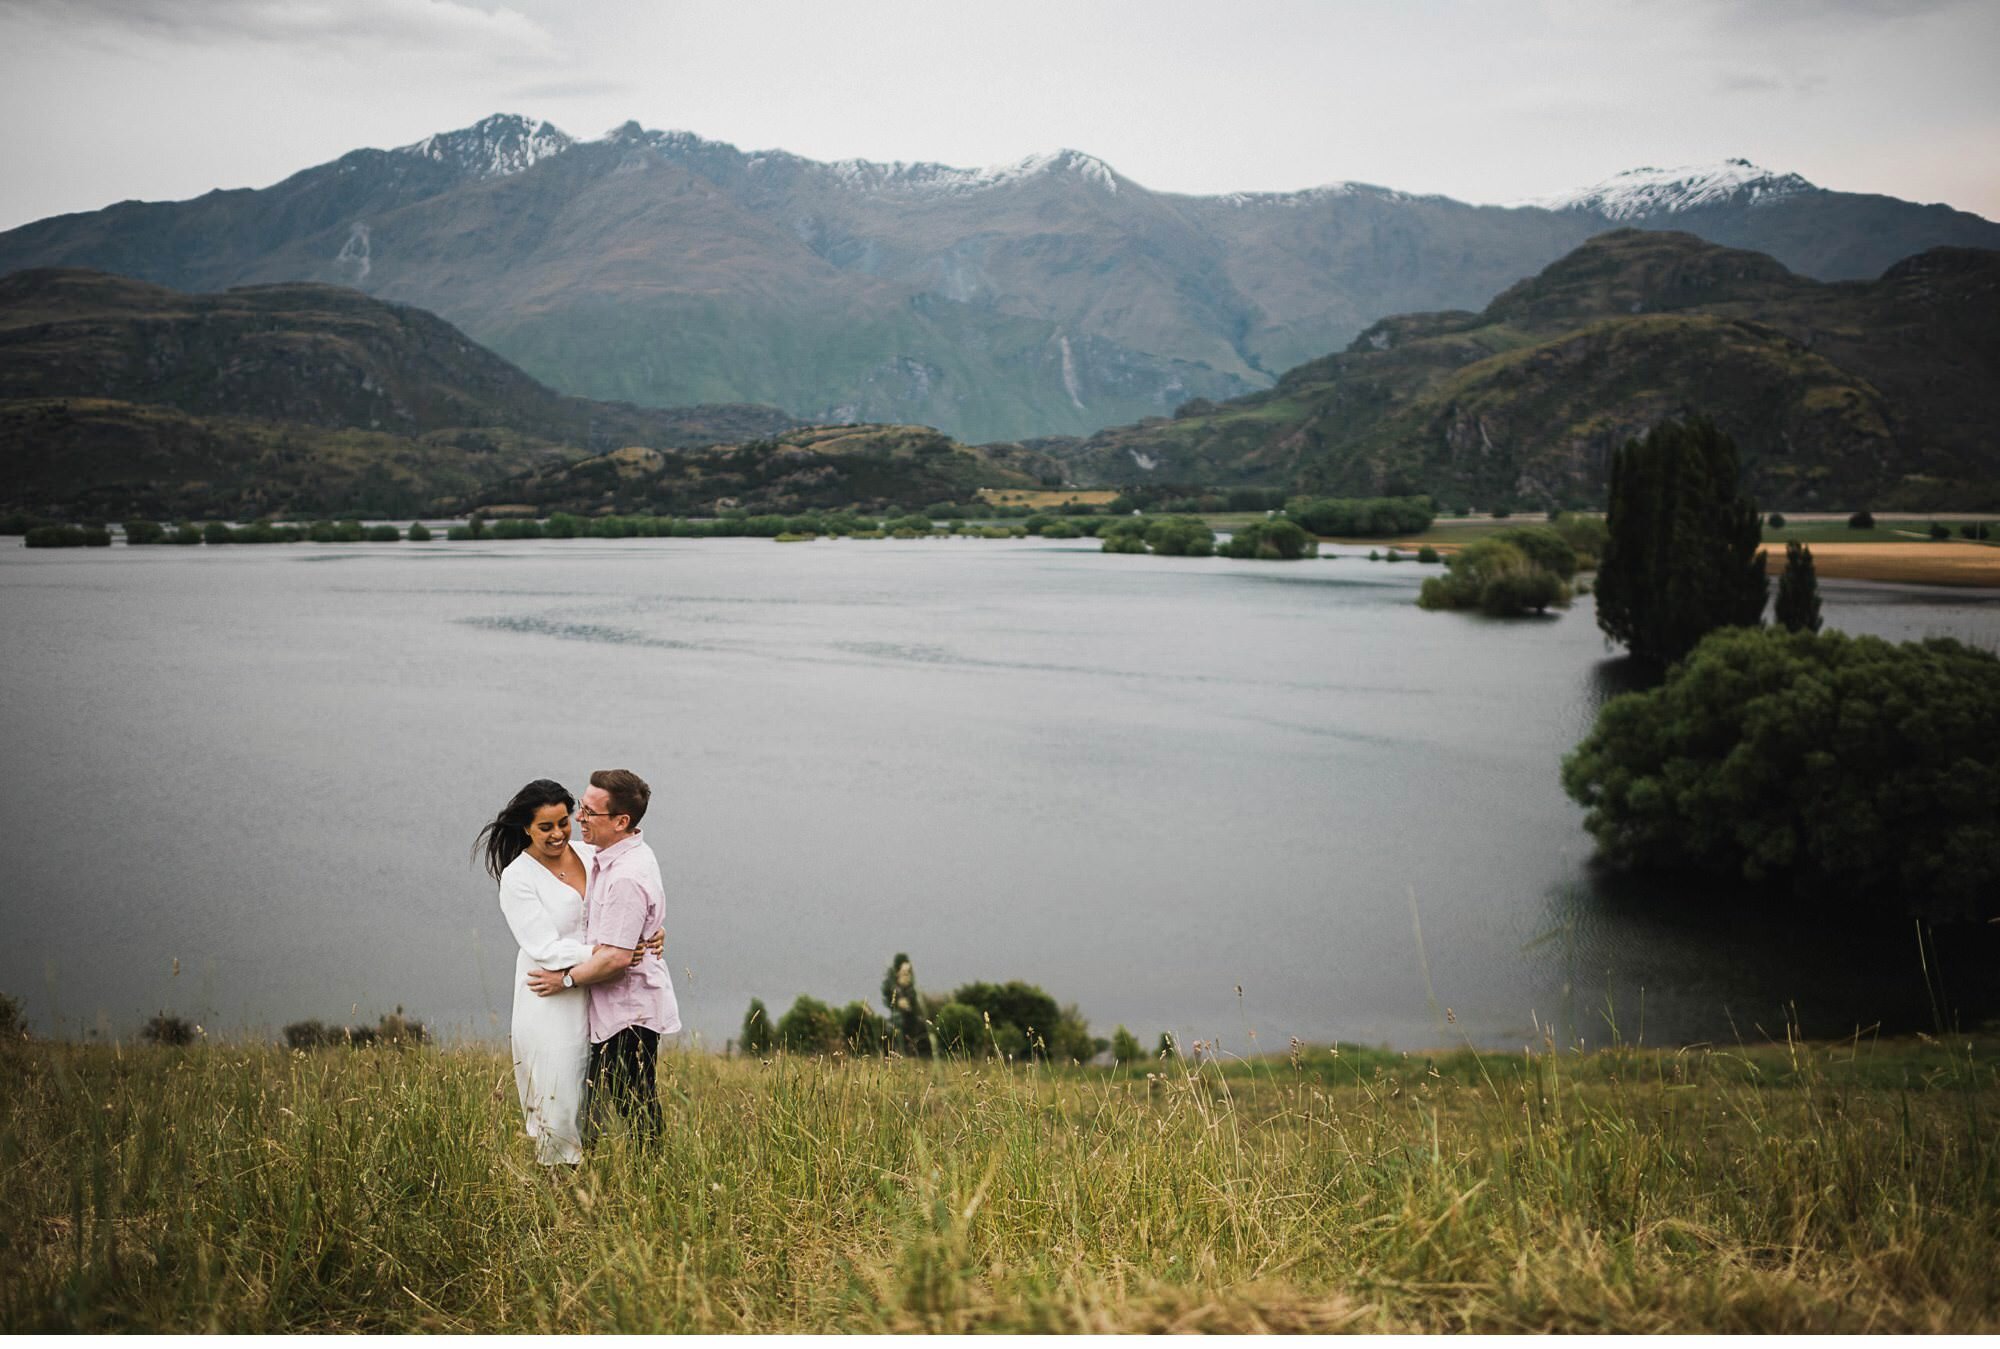 053 - New Zealand Wedding Photography Highlights.jpg